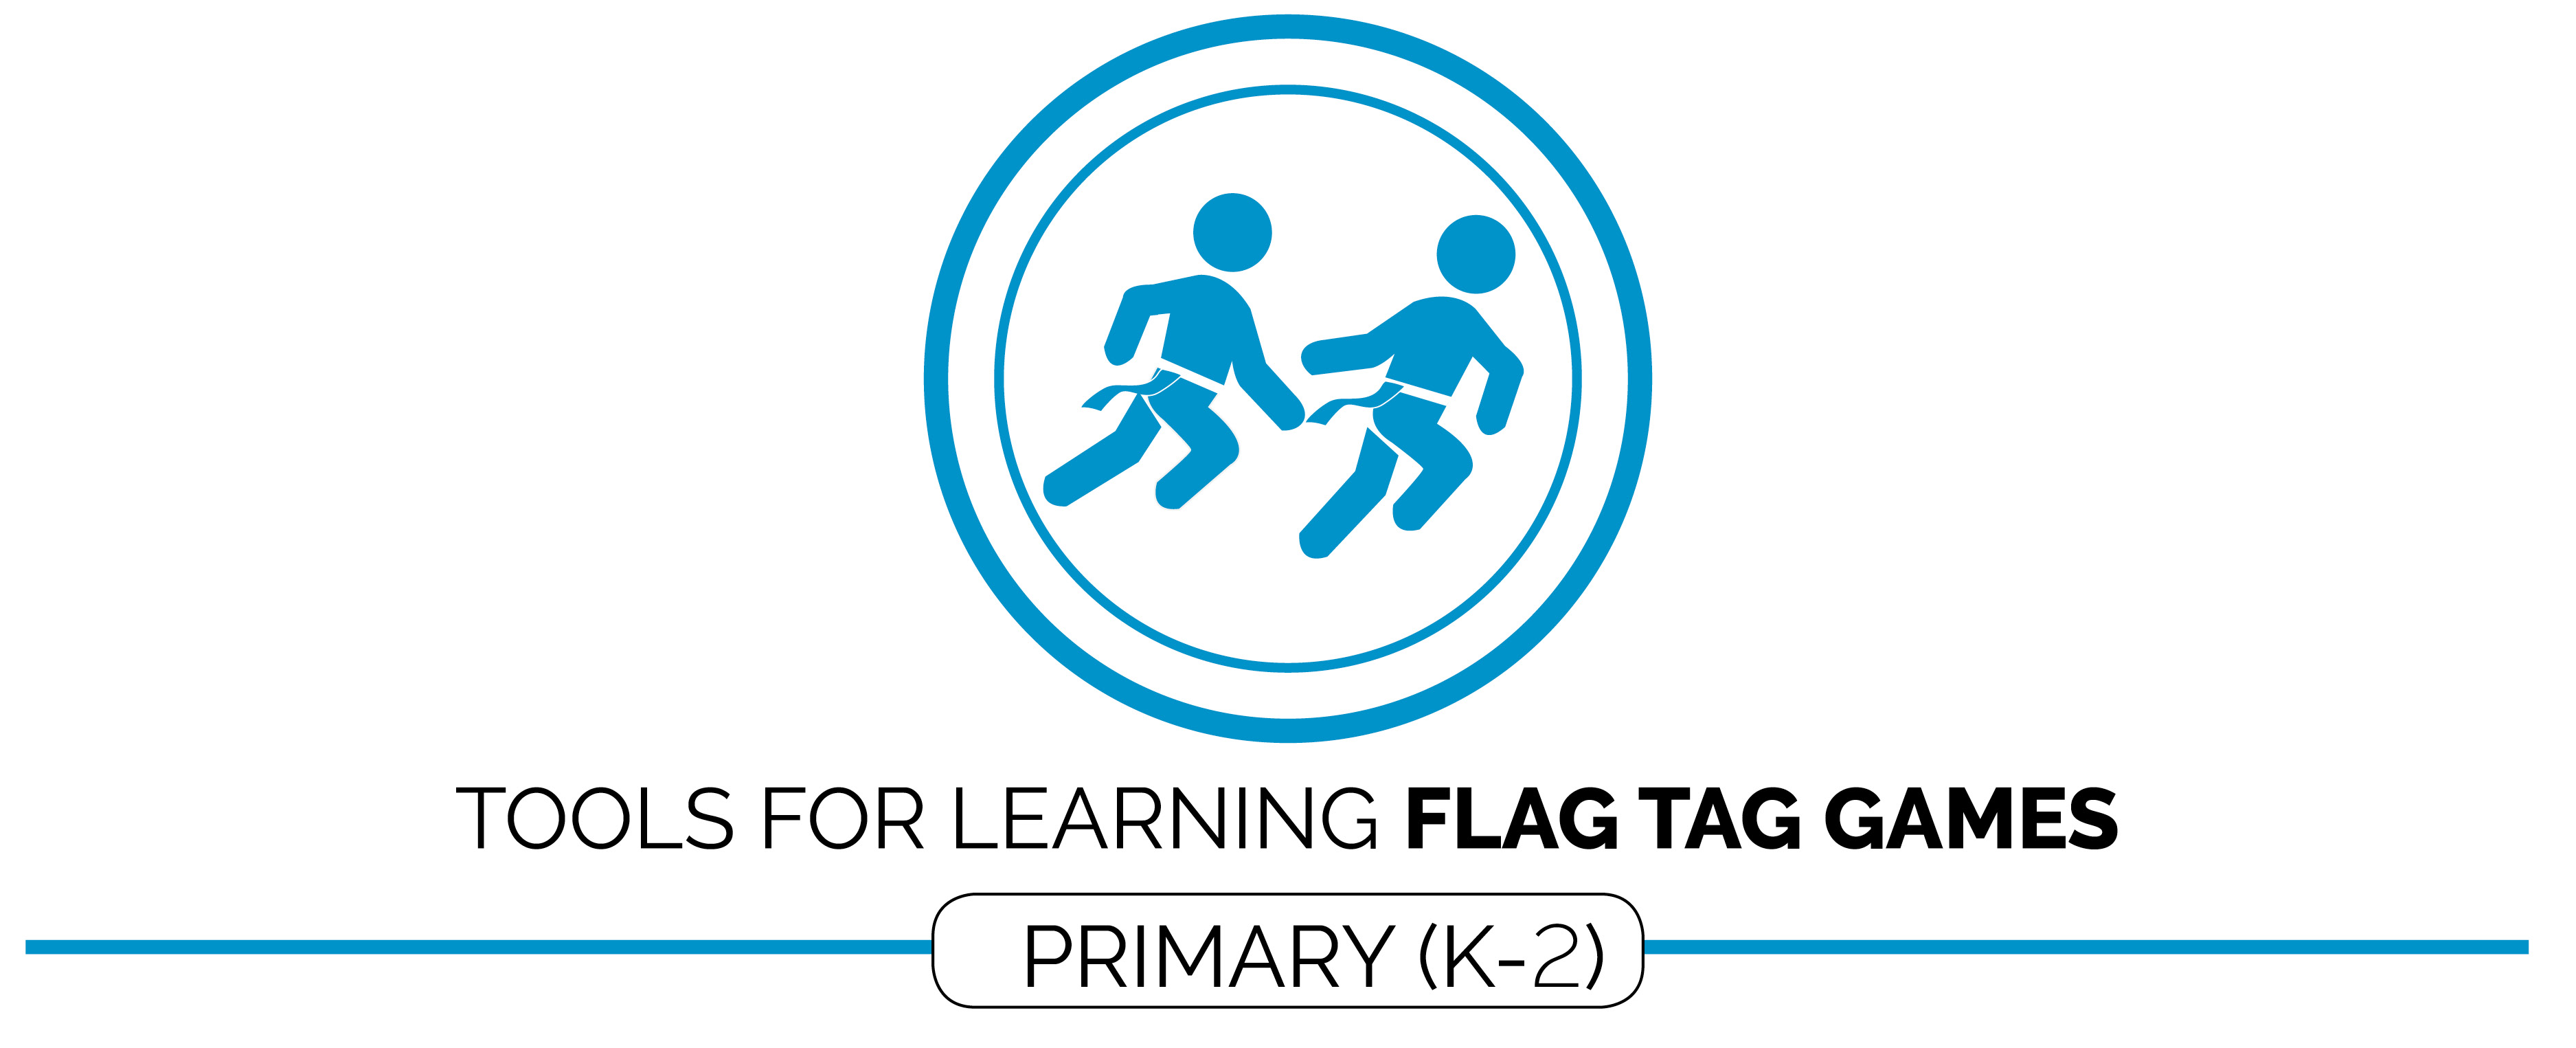 Flag Tag Grades K-2